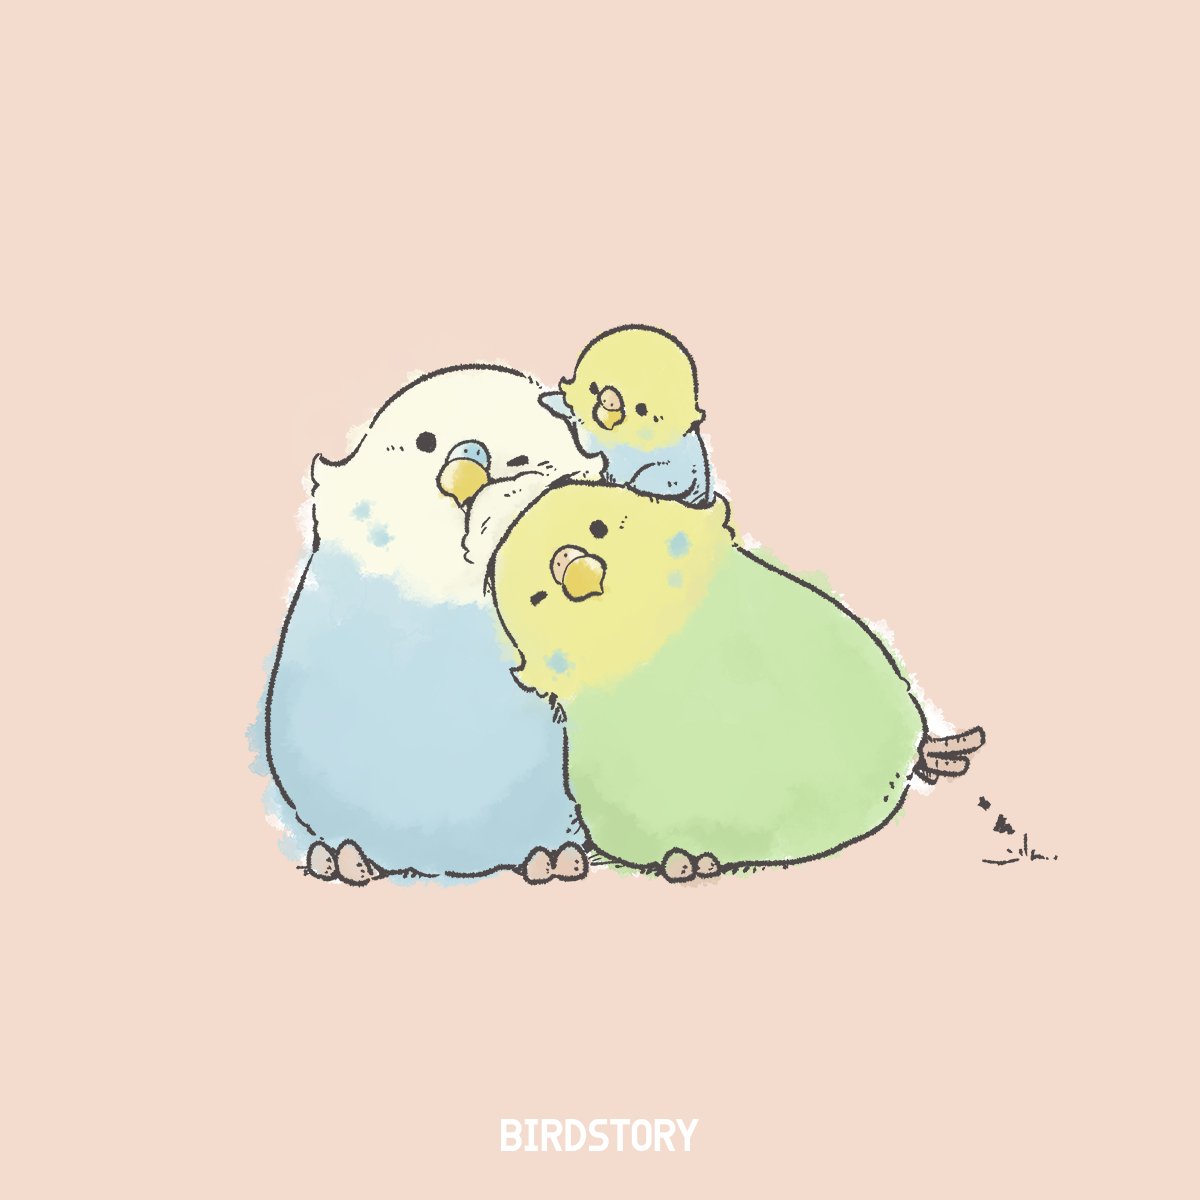 Twitter 上的 Birdstory おはようございます 本日は4月22日 よいふうふの語呂合わせから よい夫婦の日とのことです Birdstory よい夫婦の日 セキセイインコ T Co Wh4z3vz3ij Twitter